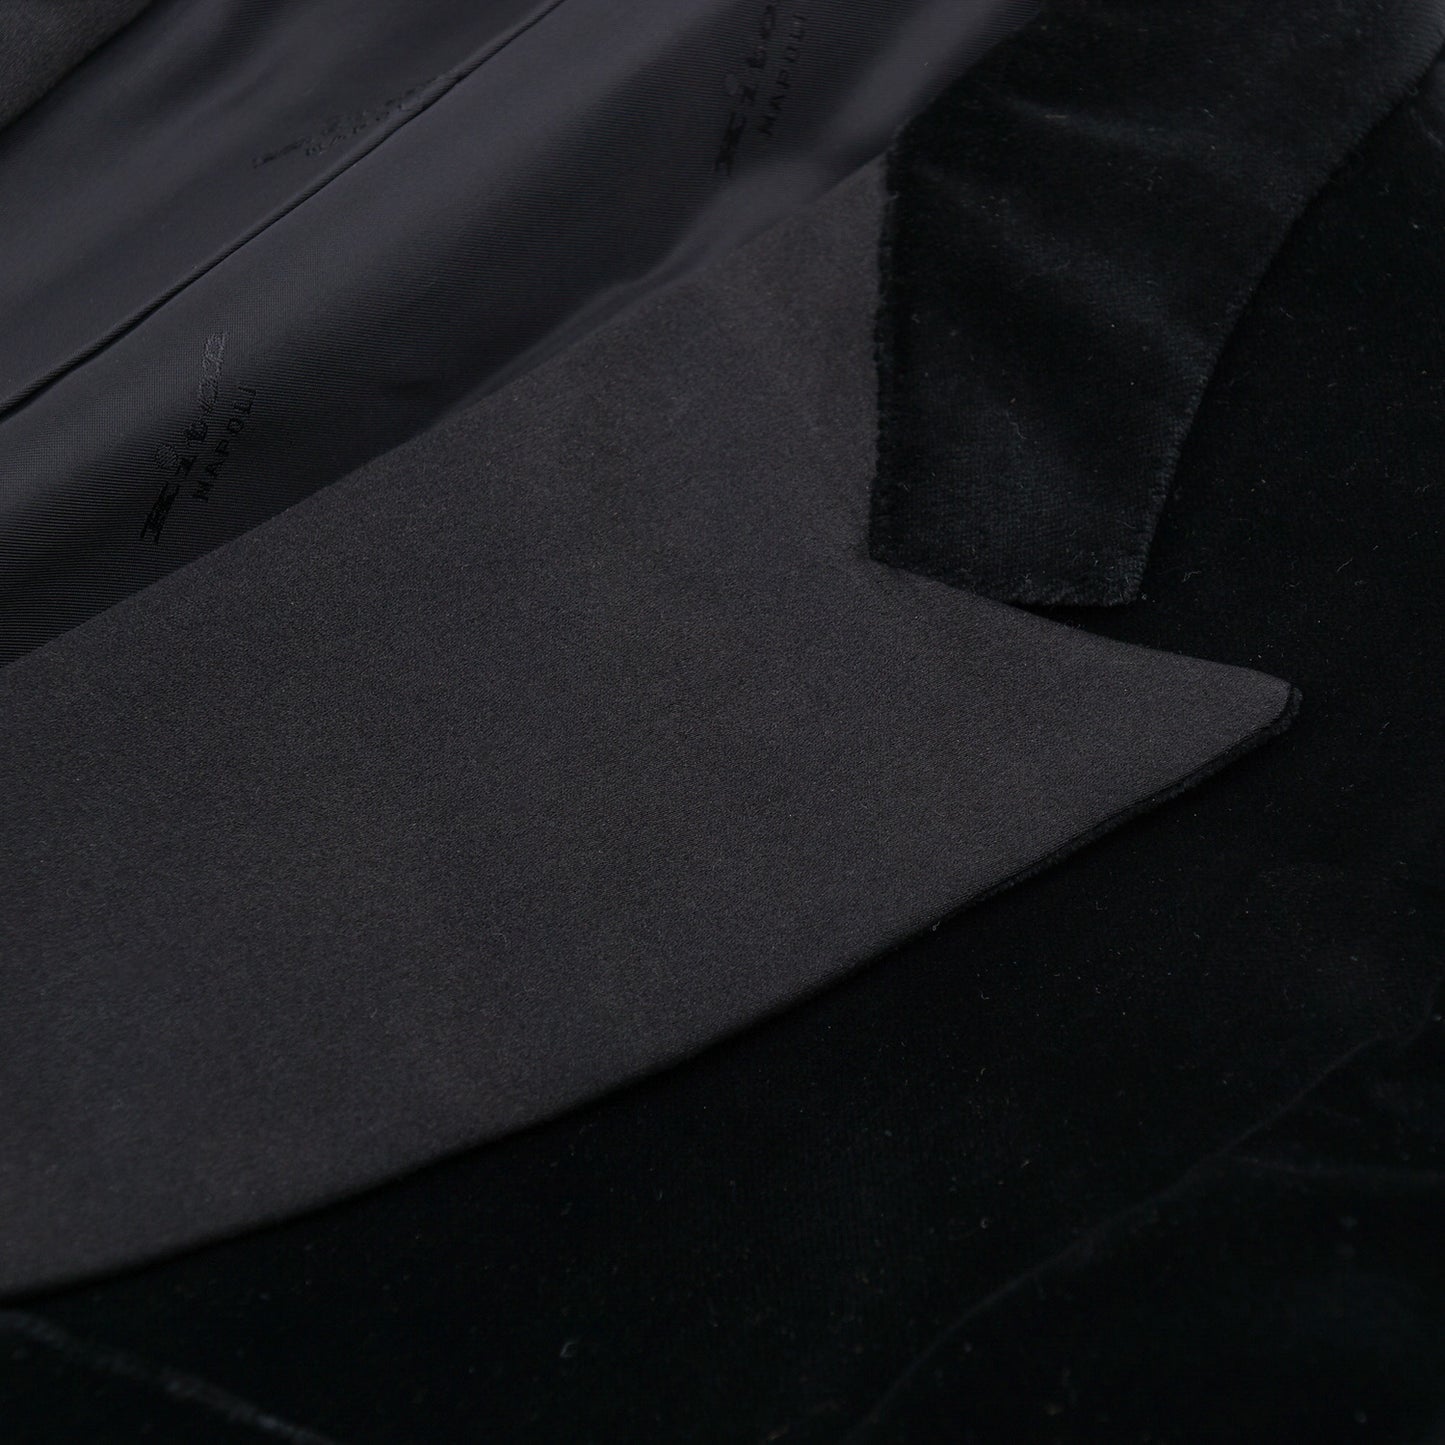 Kiton Black Velvet Tuxedo with Peak Lapels - Top Shelf Apparel